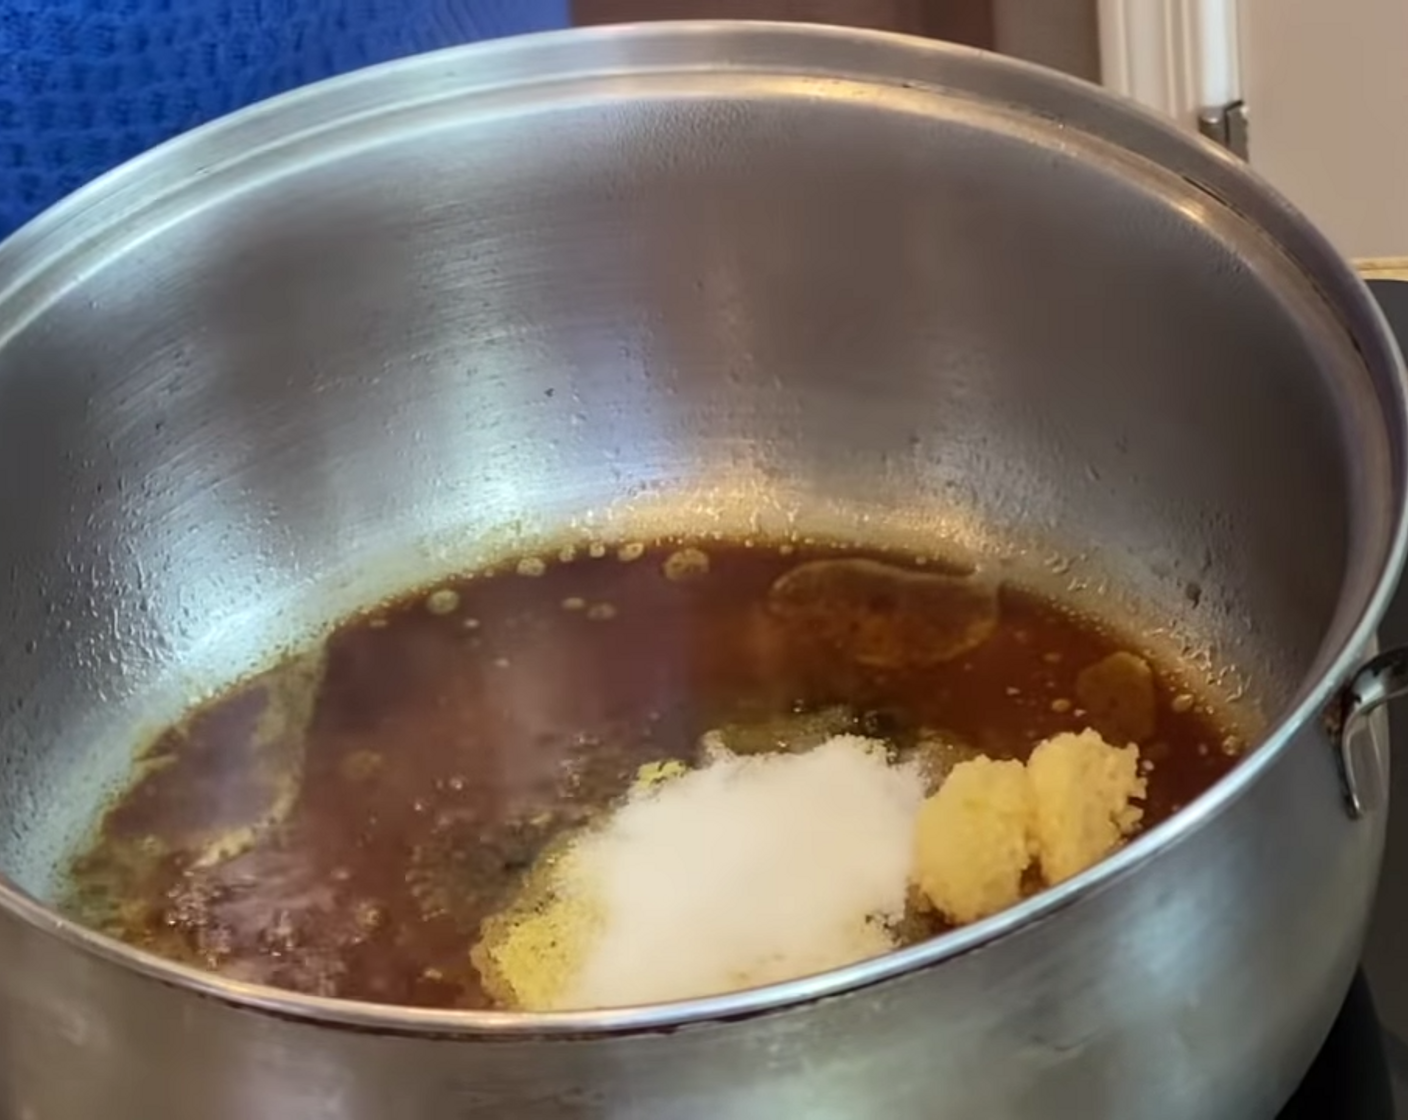 step 1 In a pot over medium heat, add Corn Oil (1/4 cup), Garlic (1 Tbsp), Adobo Seasoning (1 Tbsp), Salt (1 Tbsp), Ground Oregano (1/4 tsp), Soy Sauce (1/4 cup), and 1 Tbsp of juice from a Lime (1). Stir well.